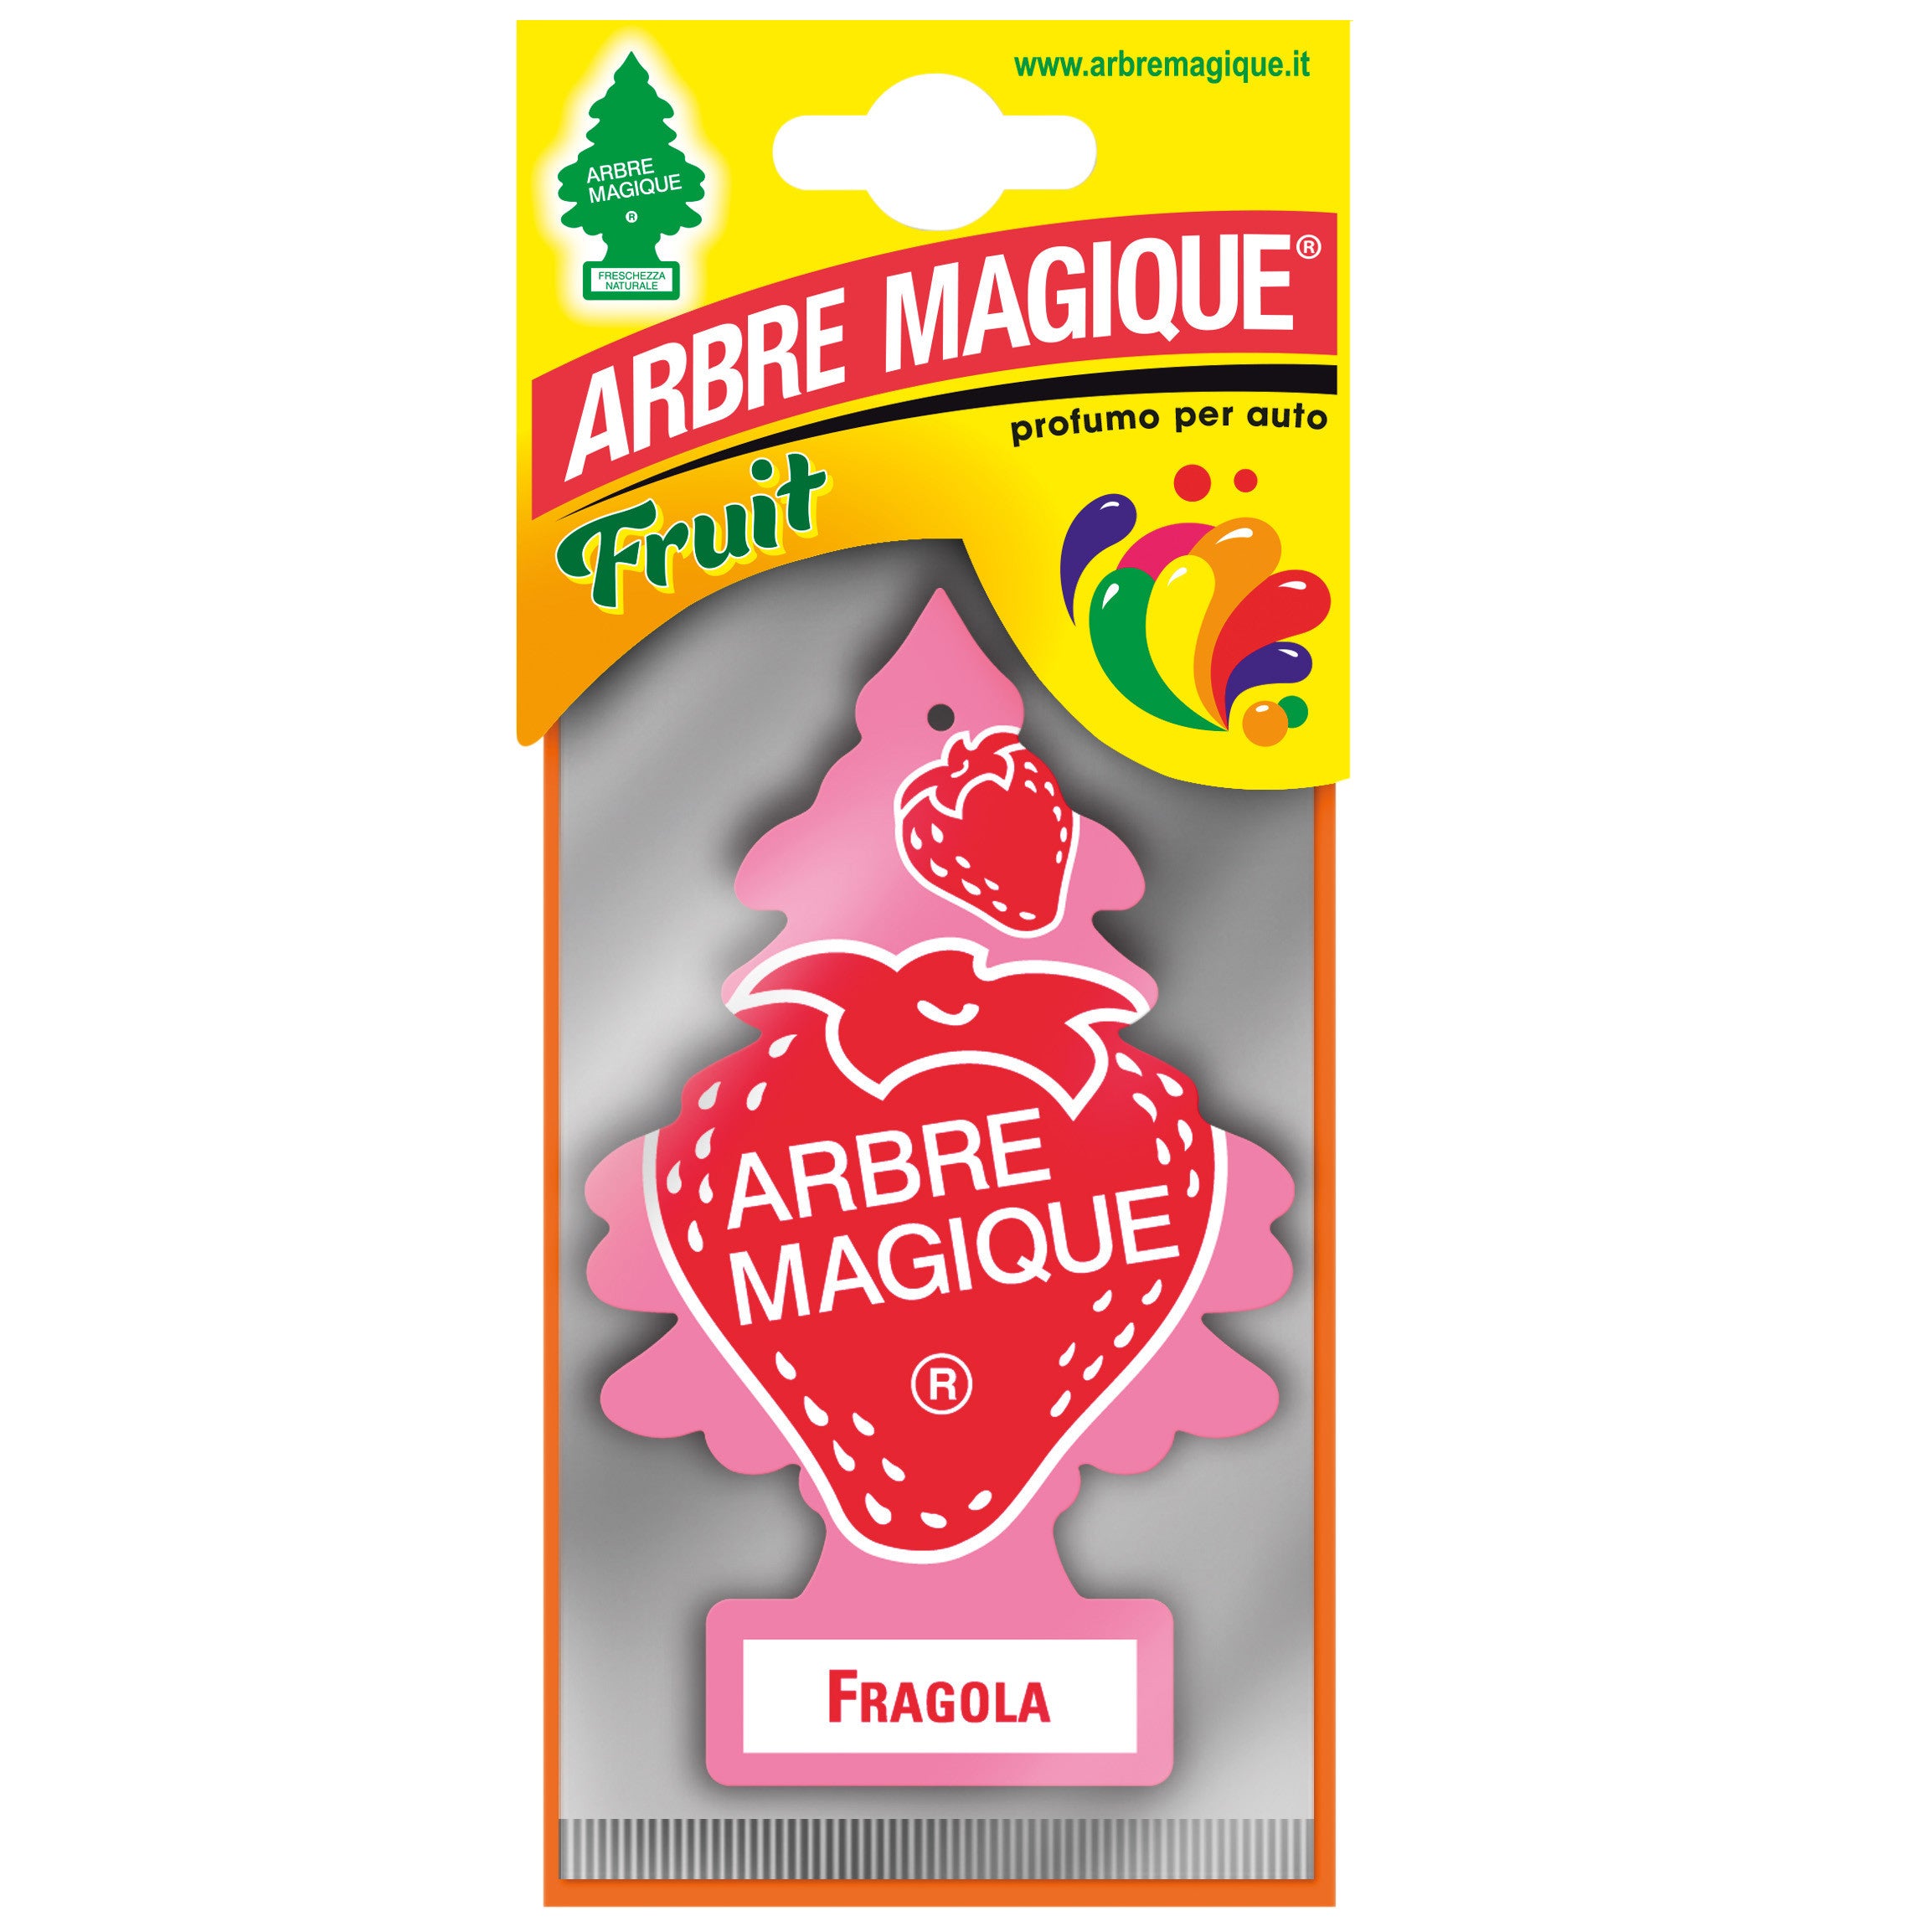 Arbre magique fruit fragola